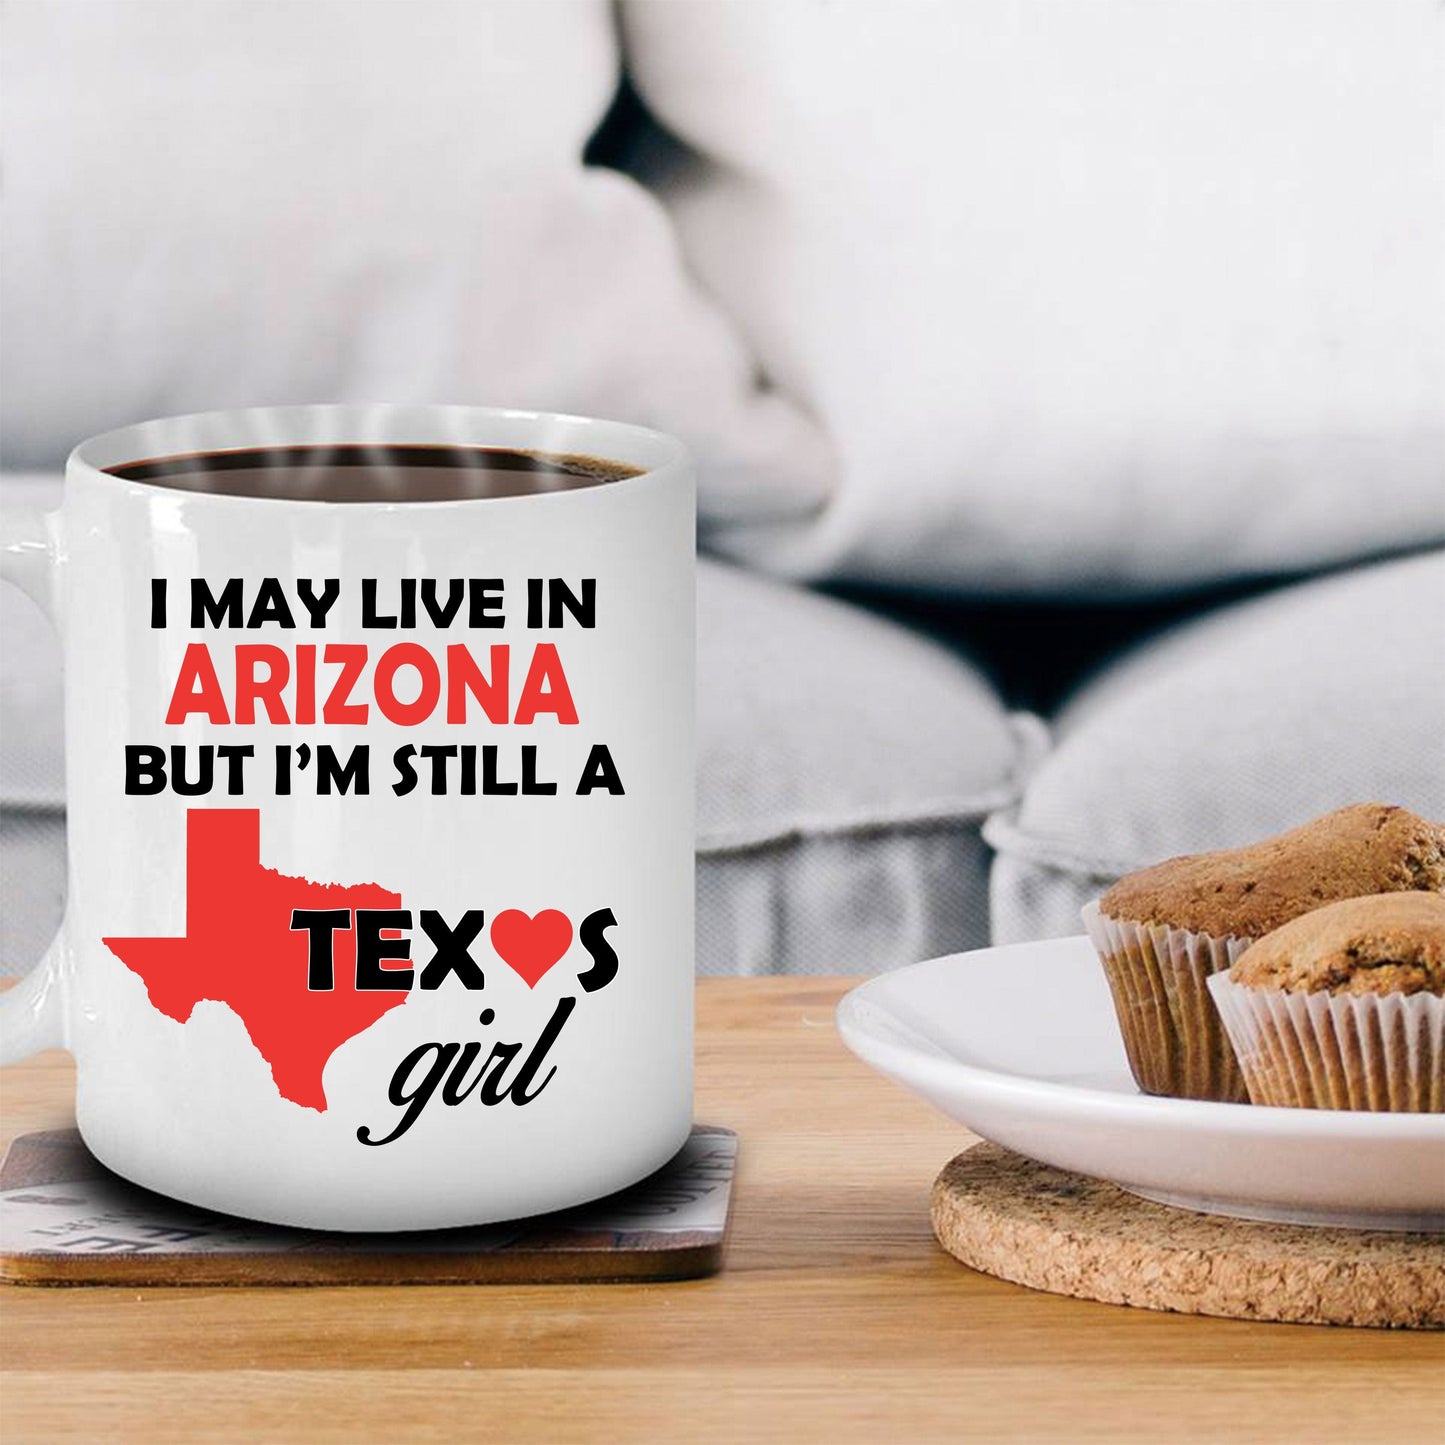 Texas Girl Coffee Mug - I May Live In Arizona But I'm Still a Texas Girl